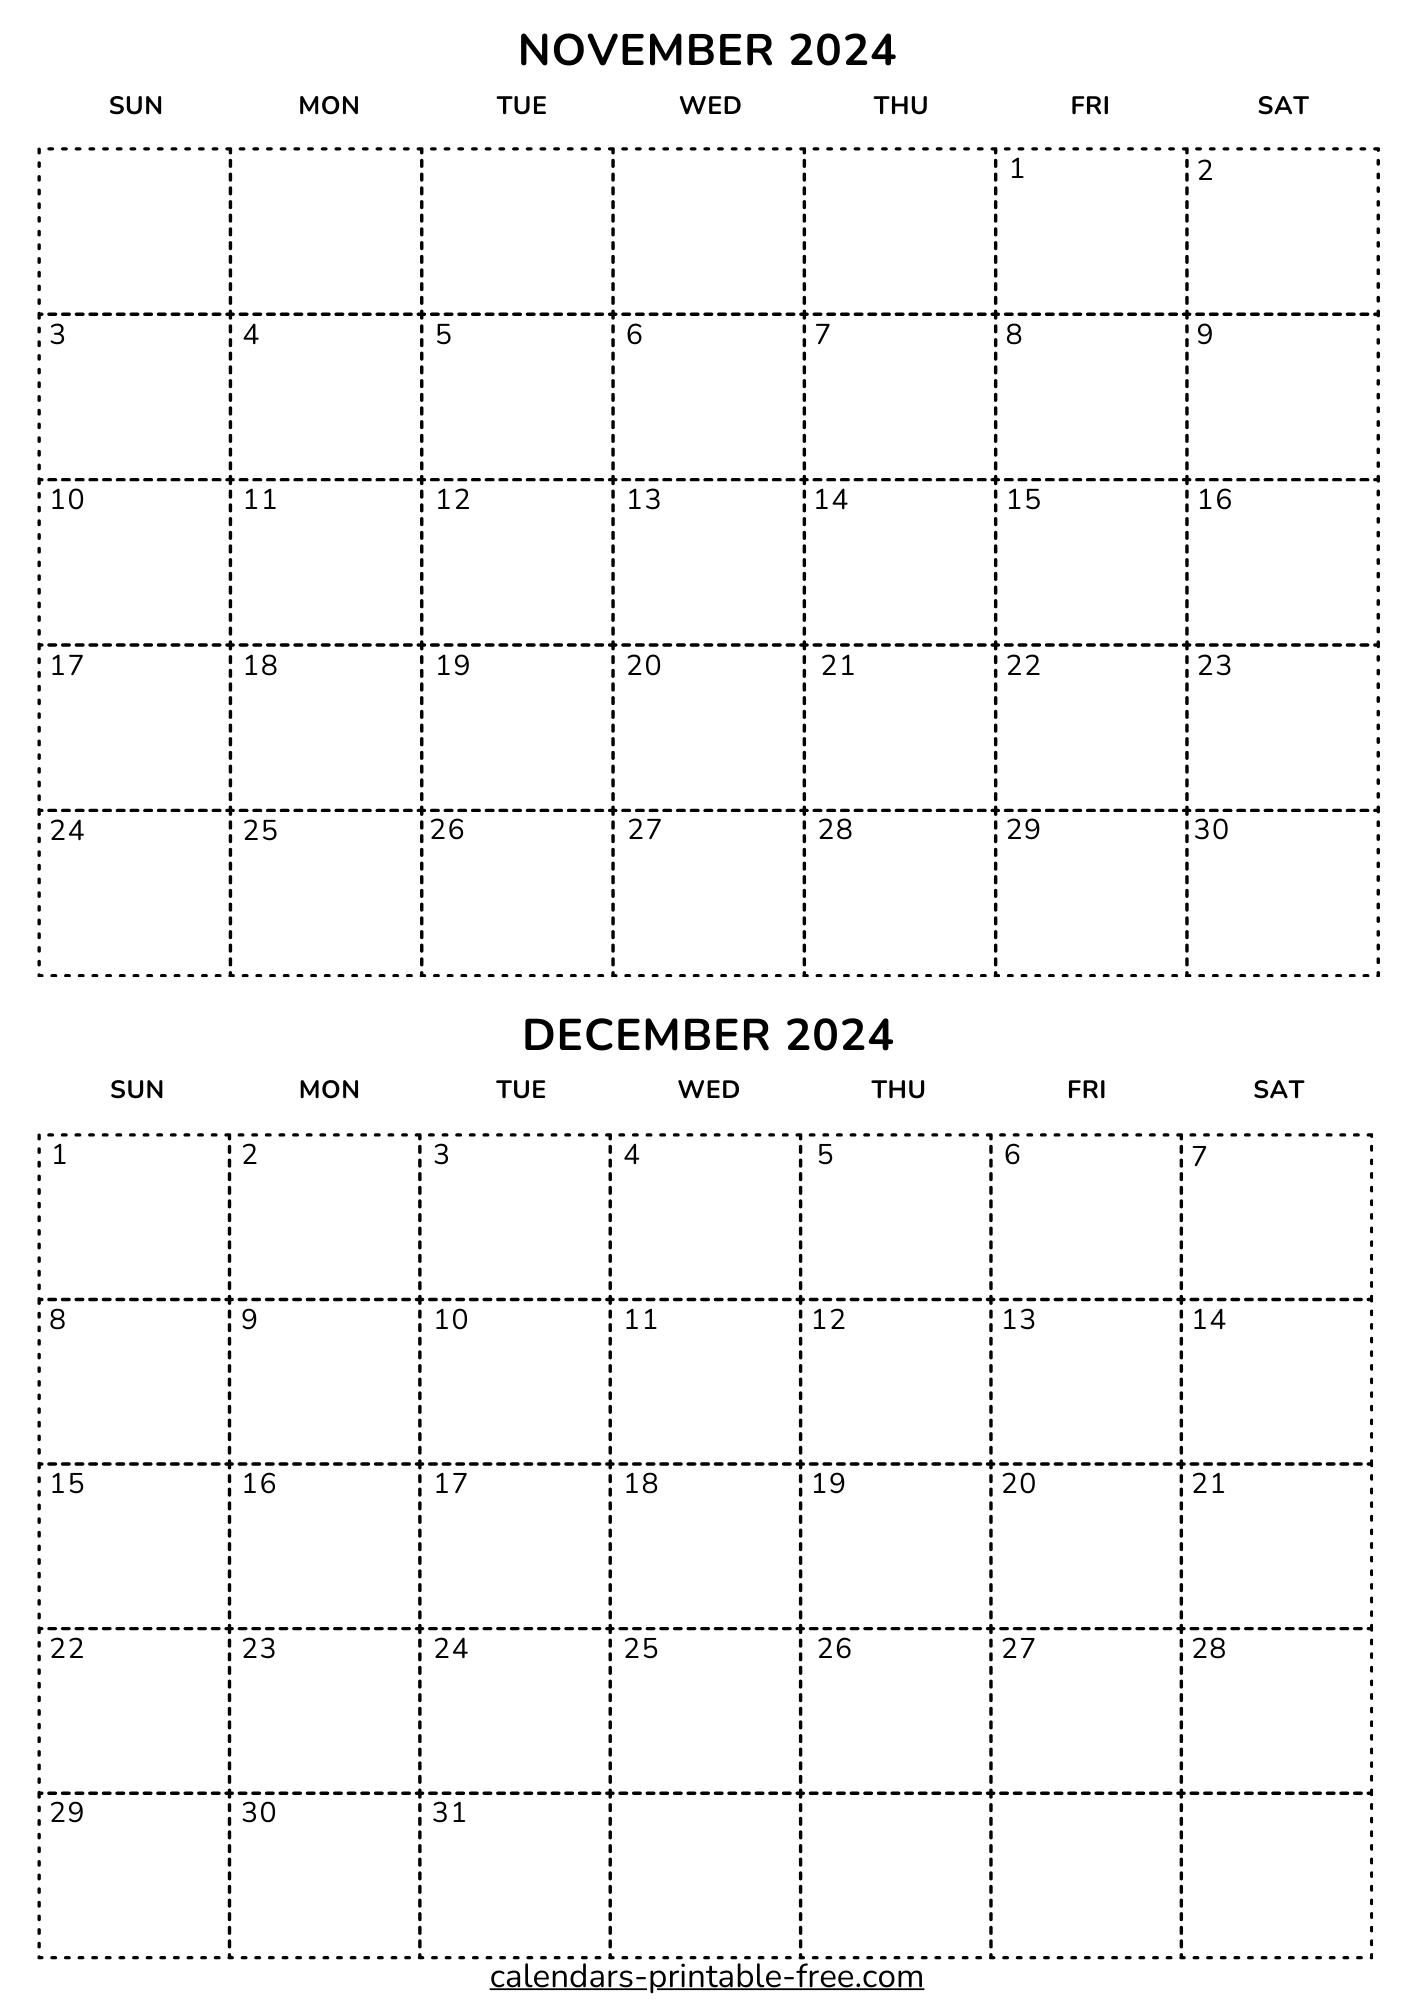 November and December 2024 Calendar Printable Free, image